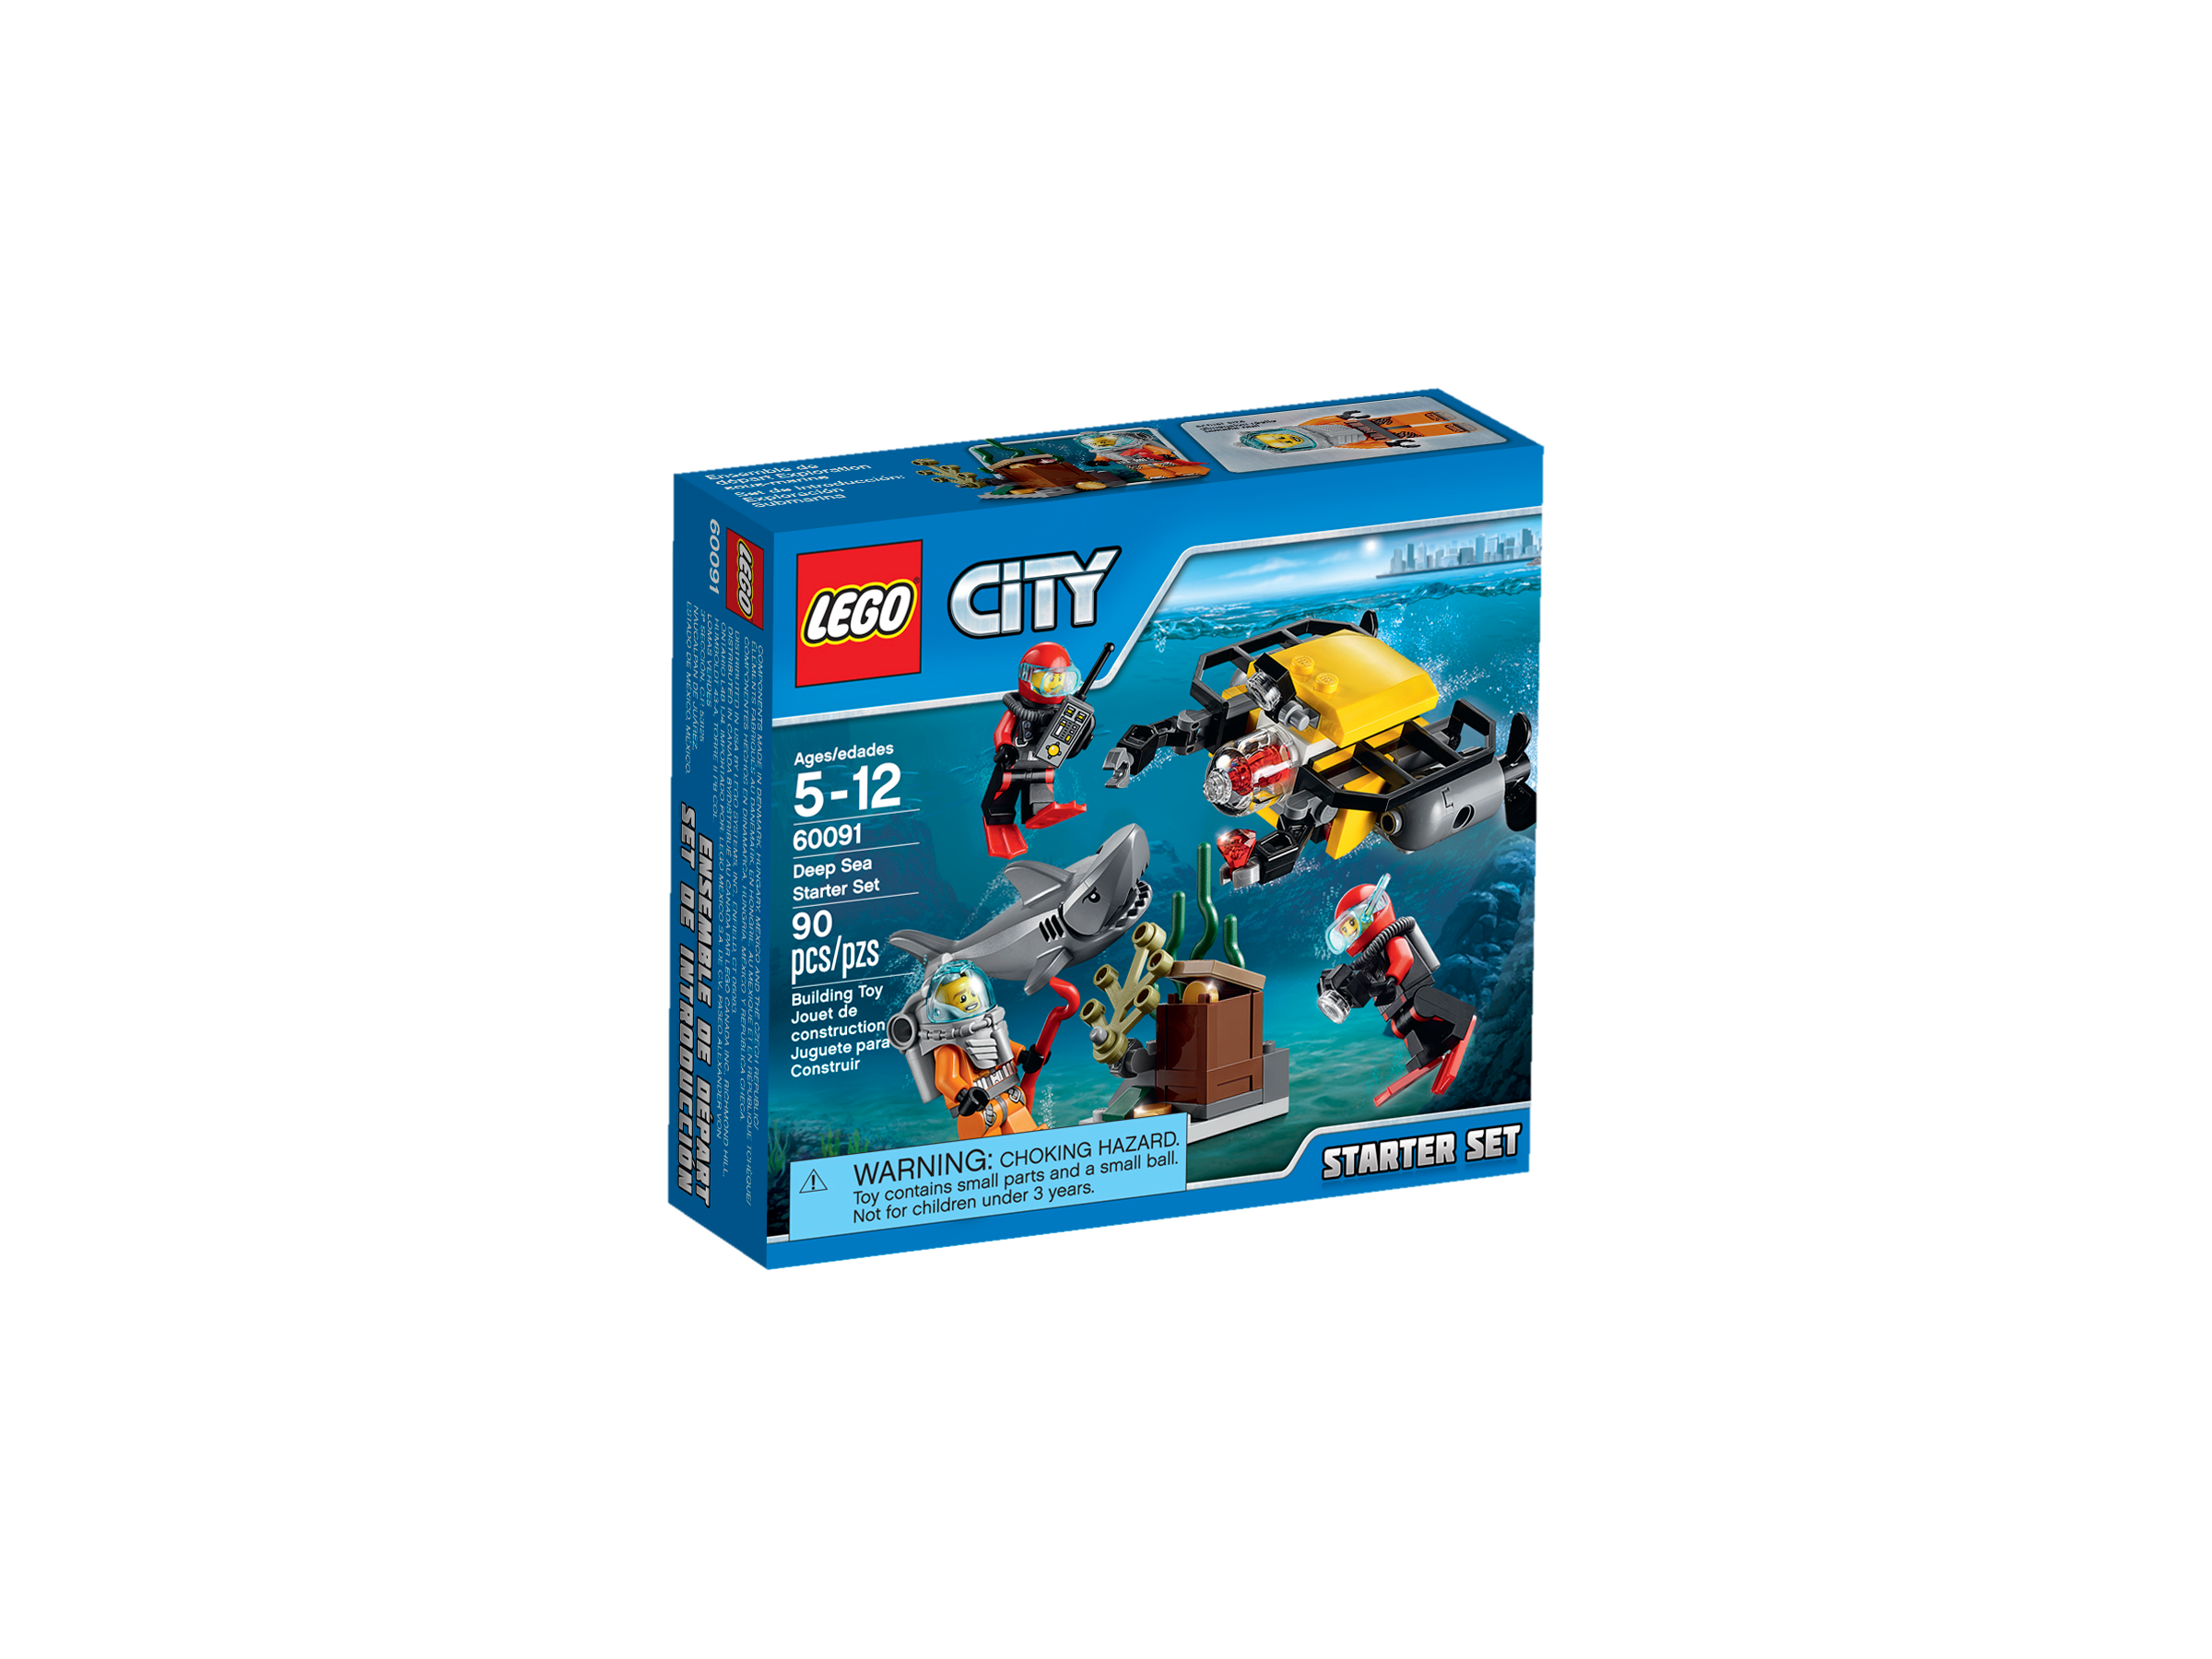 retraité-Neuf Lego City 60091 Deep Sea Starter Set-Box Set 2015 Presque comme neuf Box 